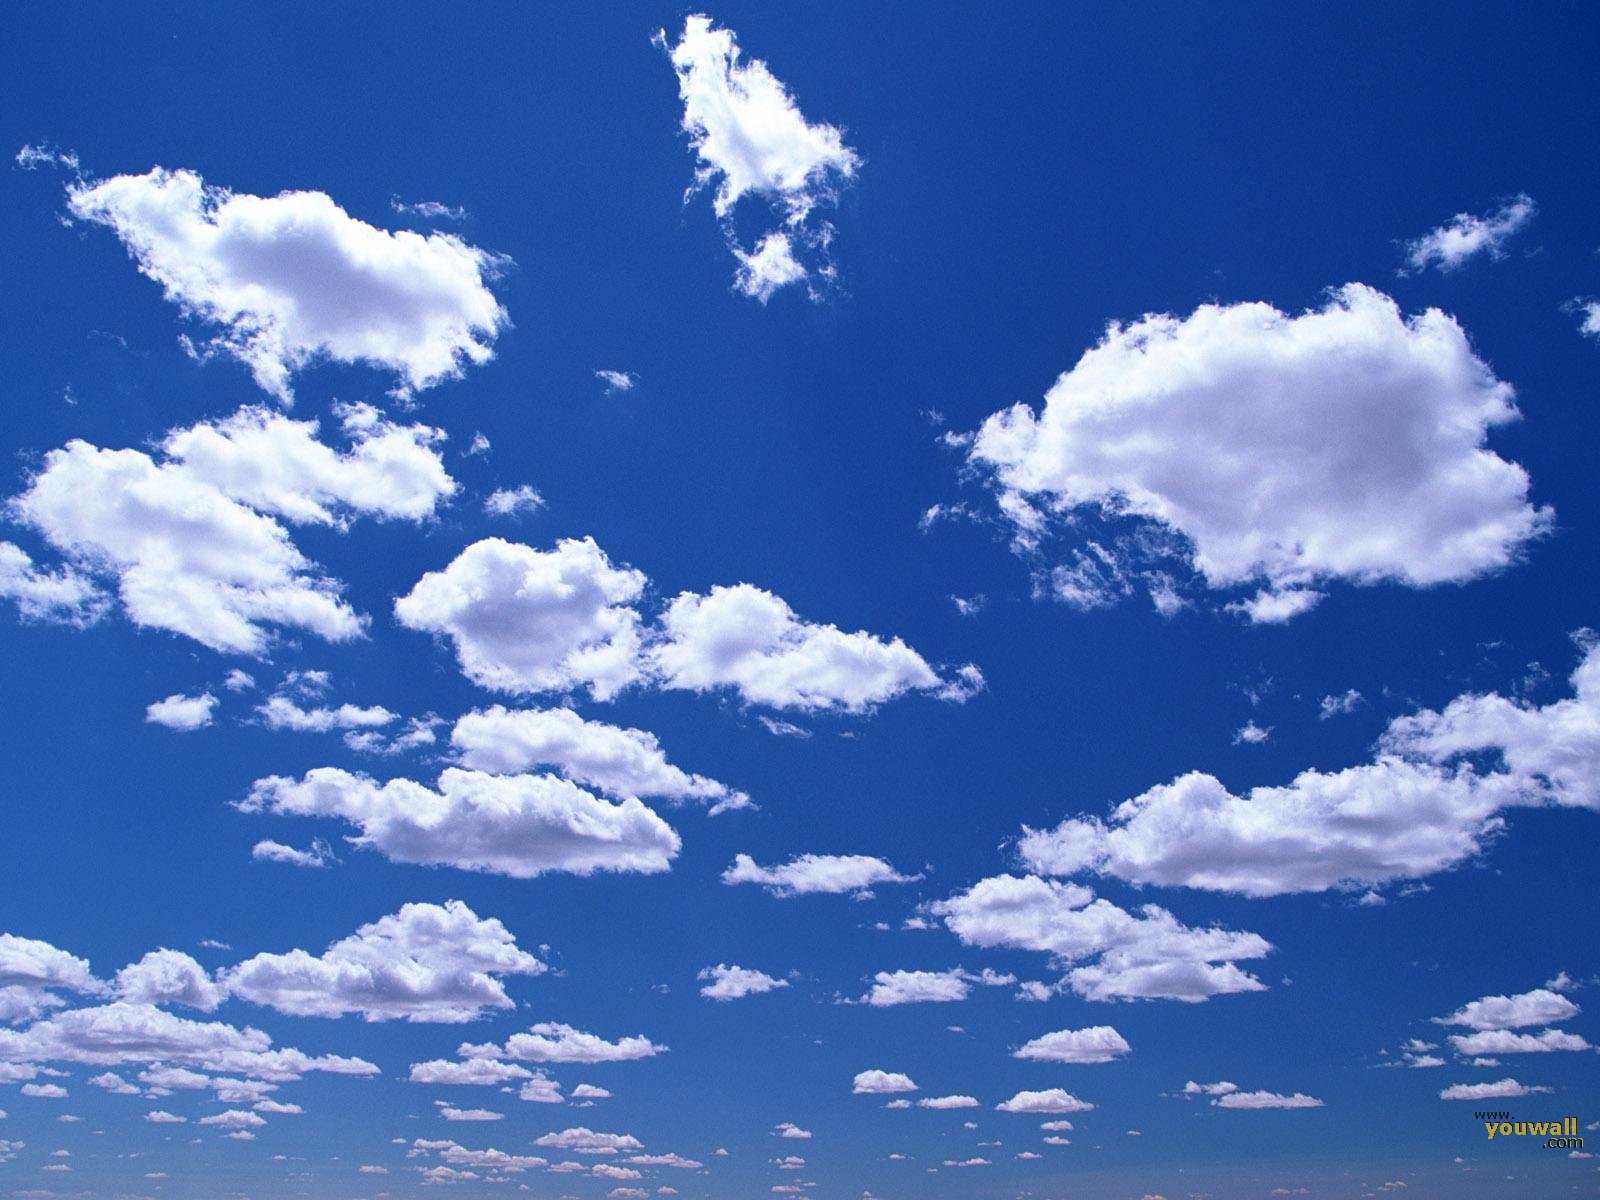 YouWall   Cloud Sky Wallpaper   wallpaperwallpapersfree wallpaper 1600x1200